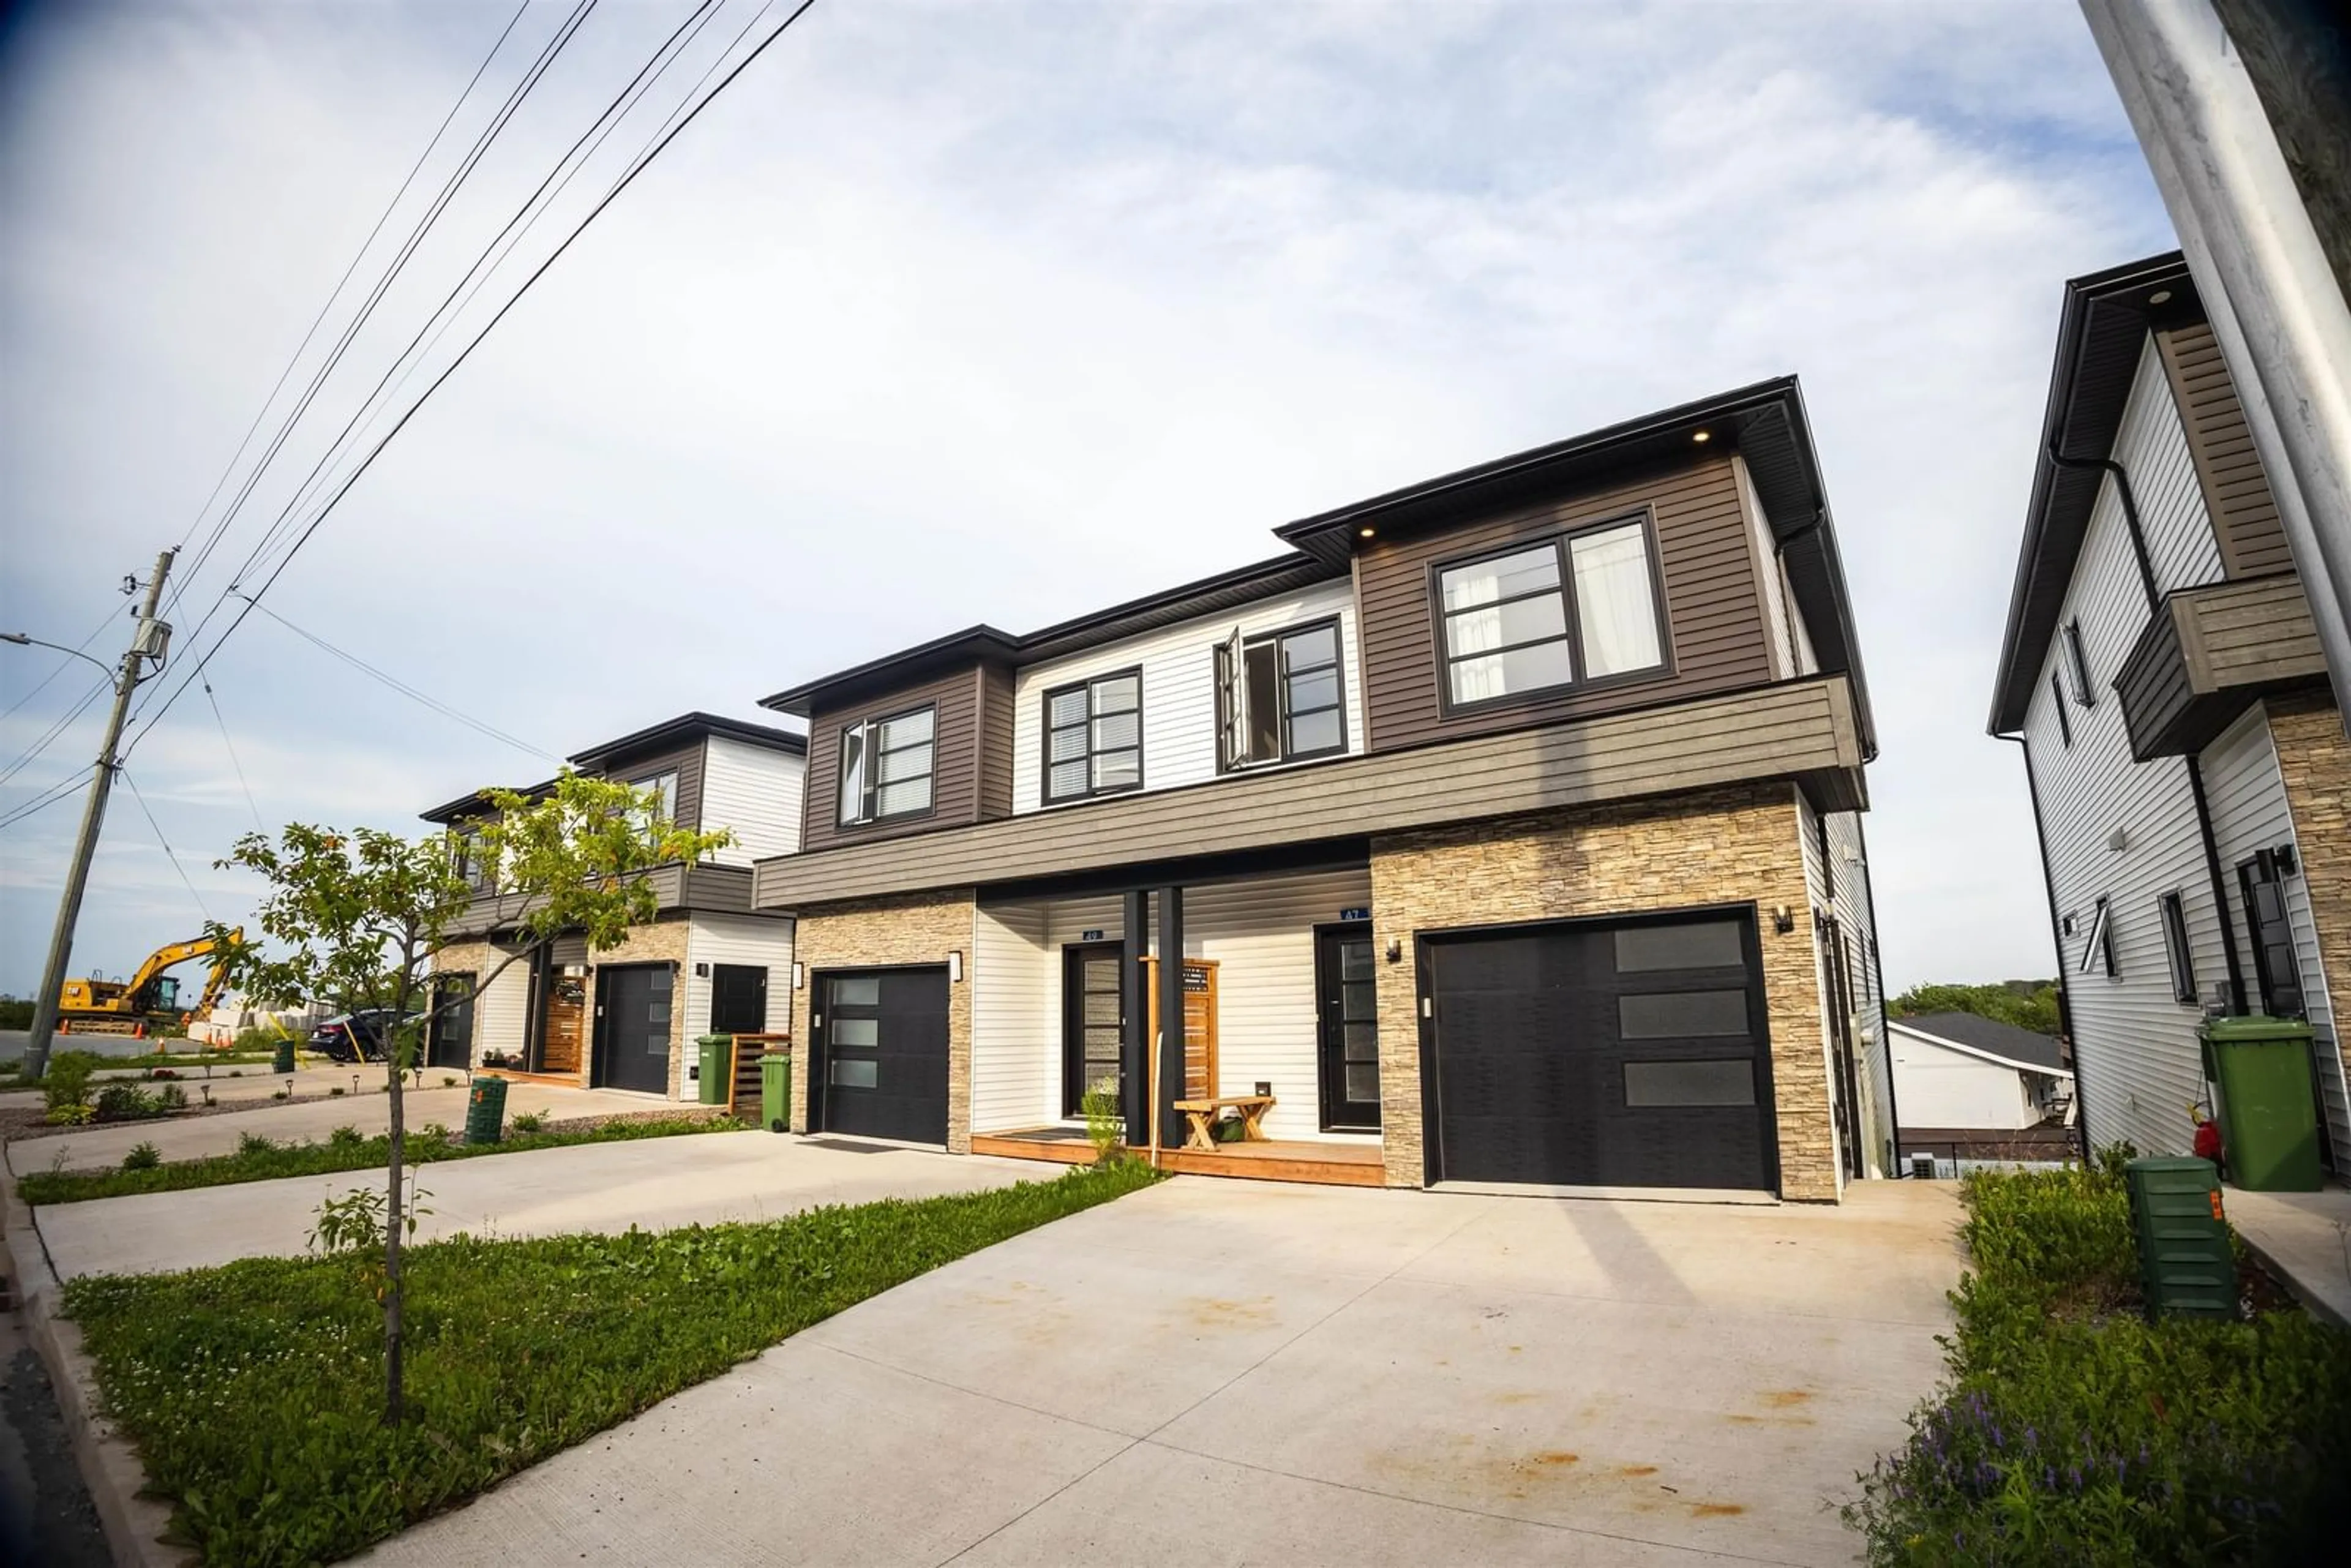 Home with brick exterior material for 47 Grenoble Crt, Halifax Nova Scotia B3P 0J8